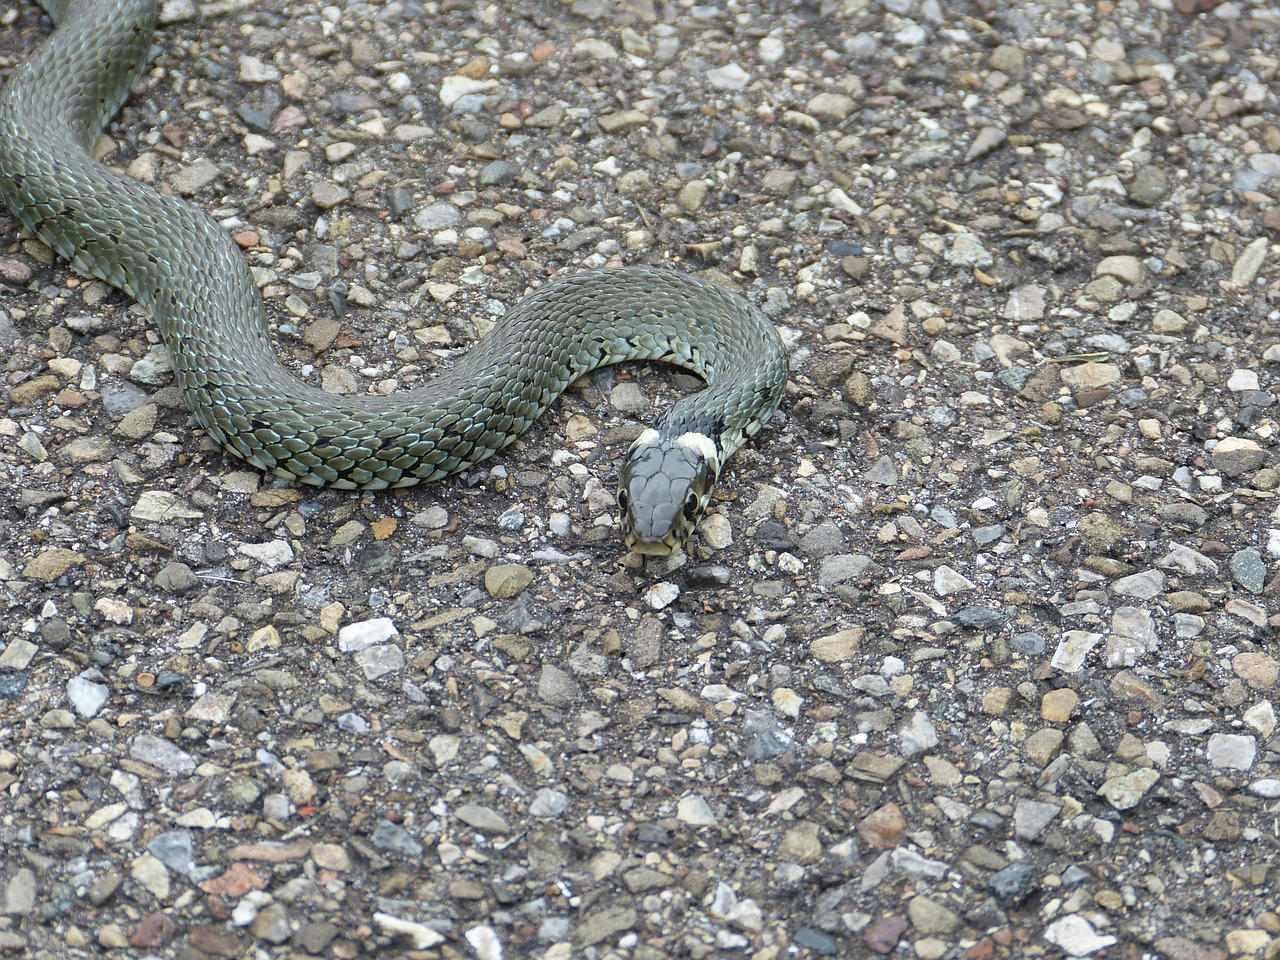 grass snake snake reptile free photo